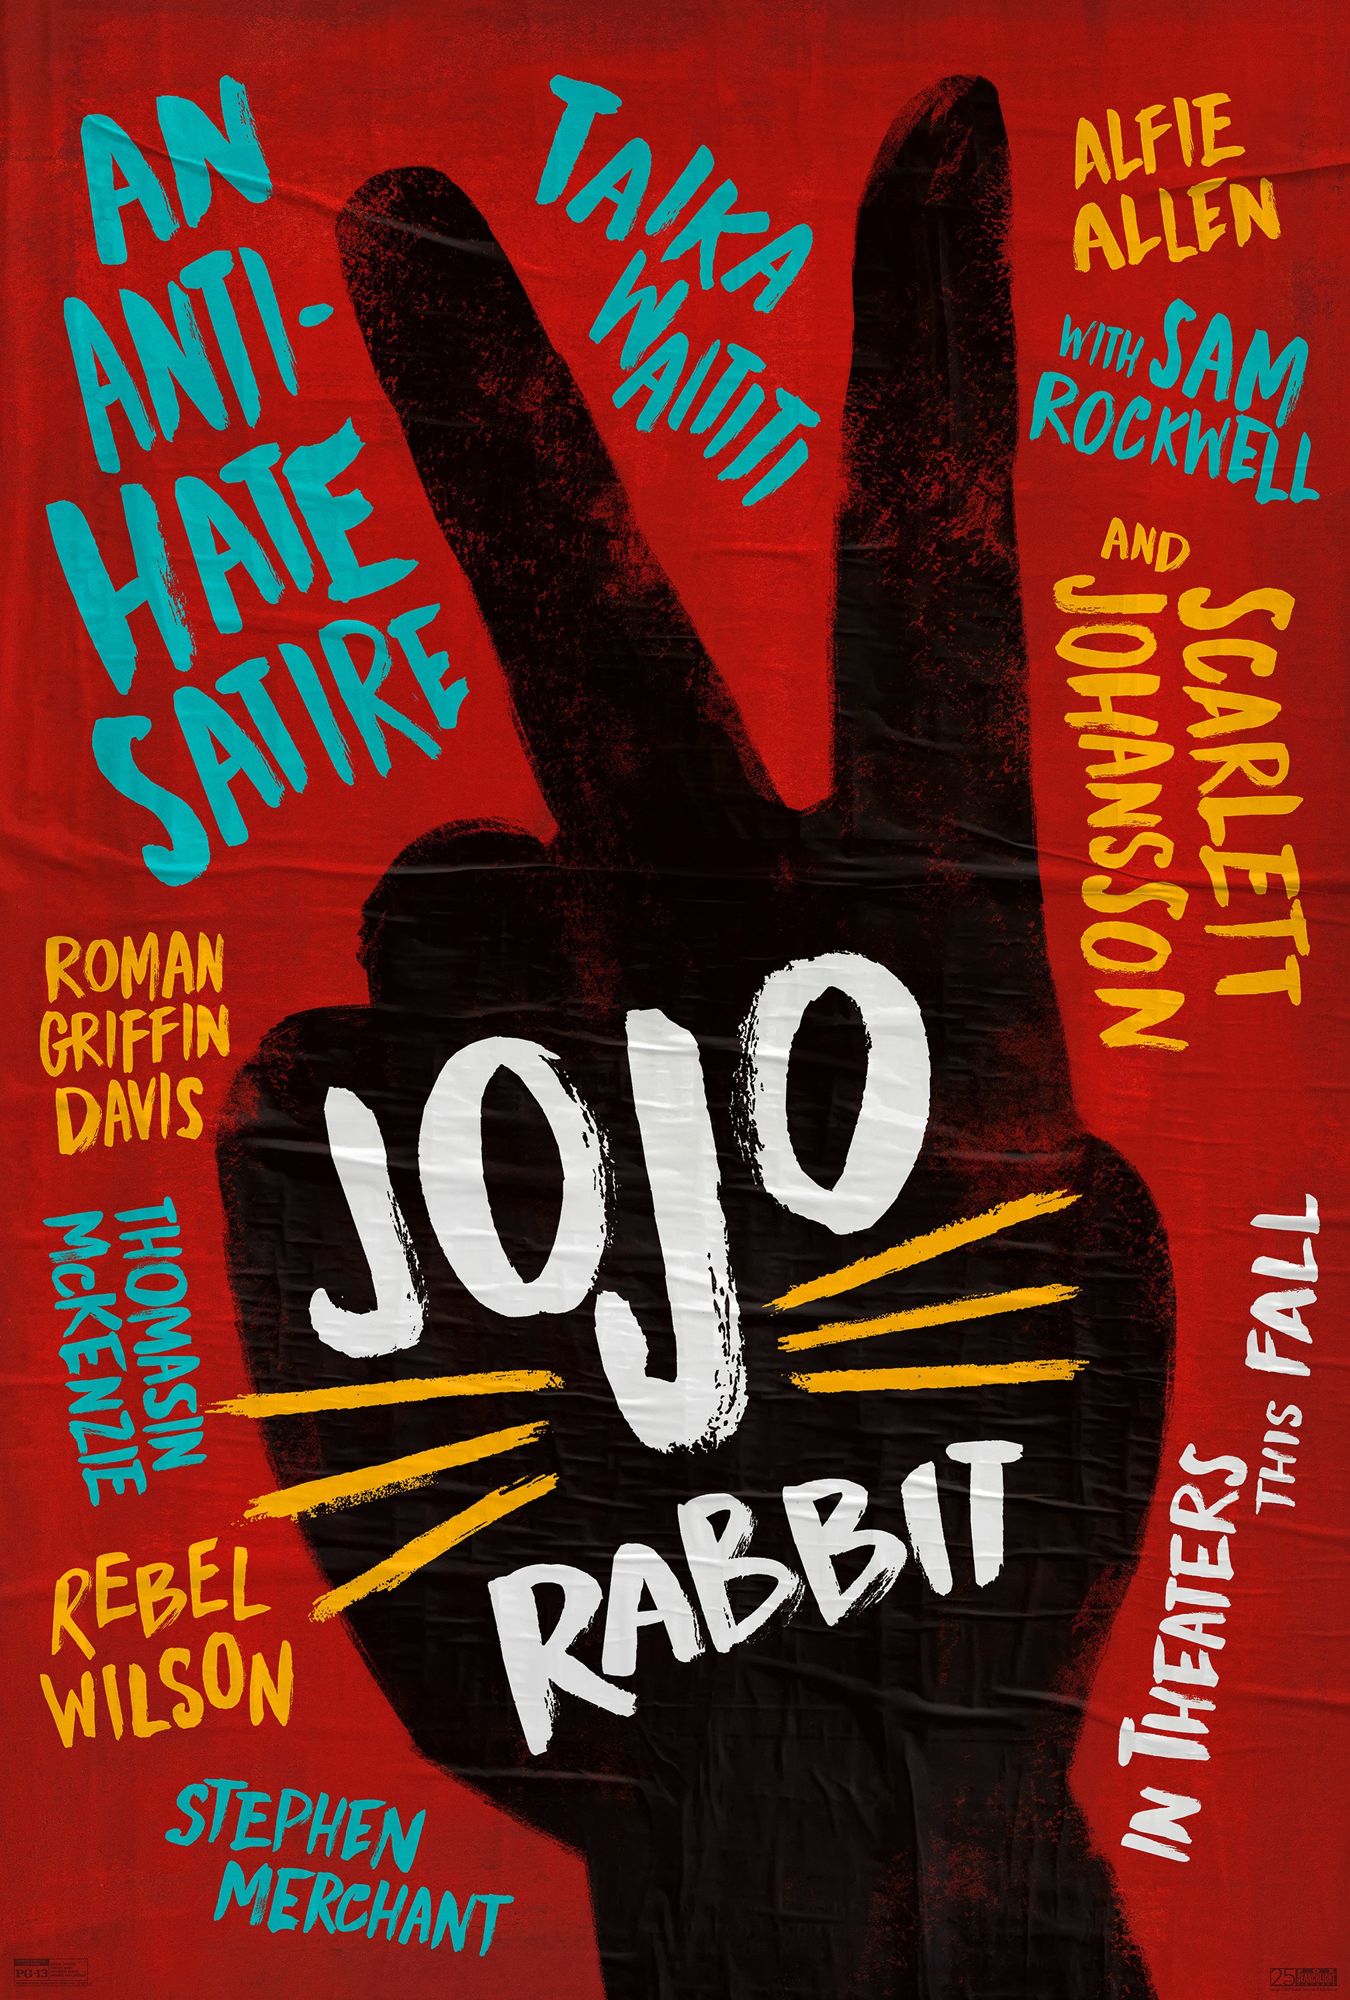 Jojo Rabbit (2019) Pictures, Photo, Image and Movie Stills